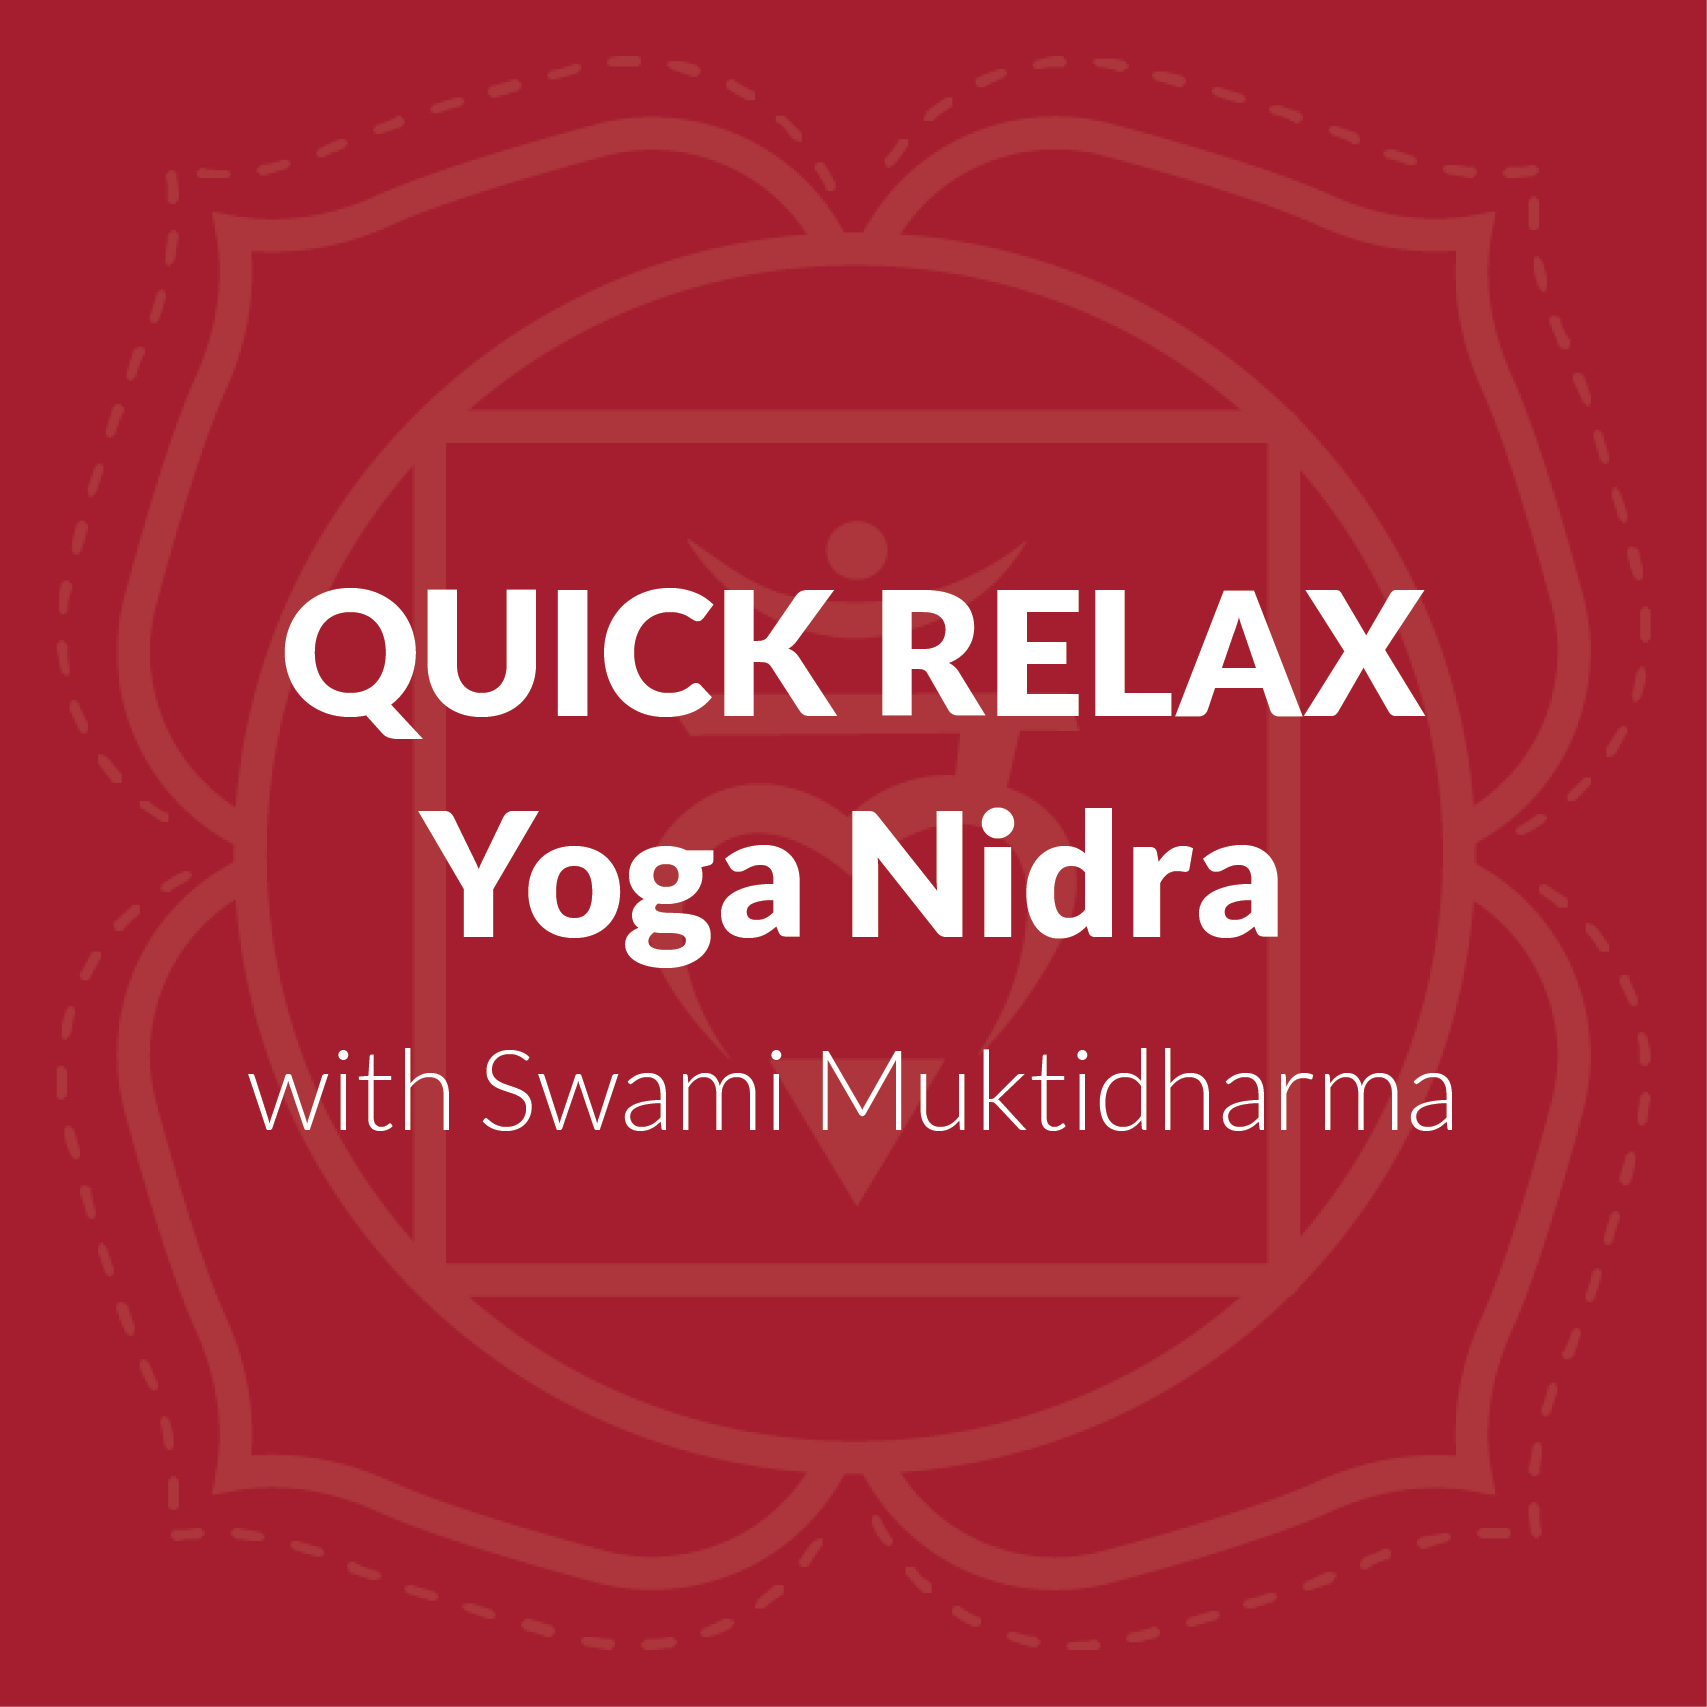 Quick Relax Yoga Nidra